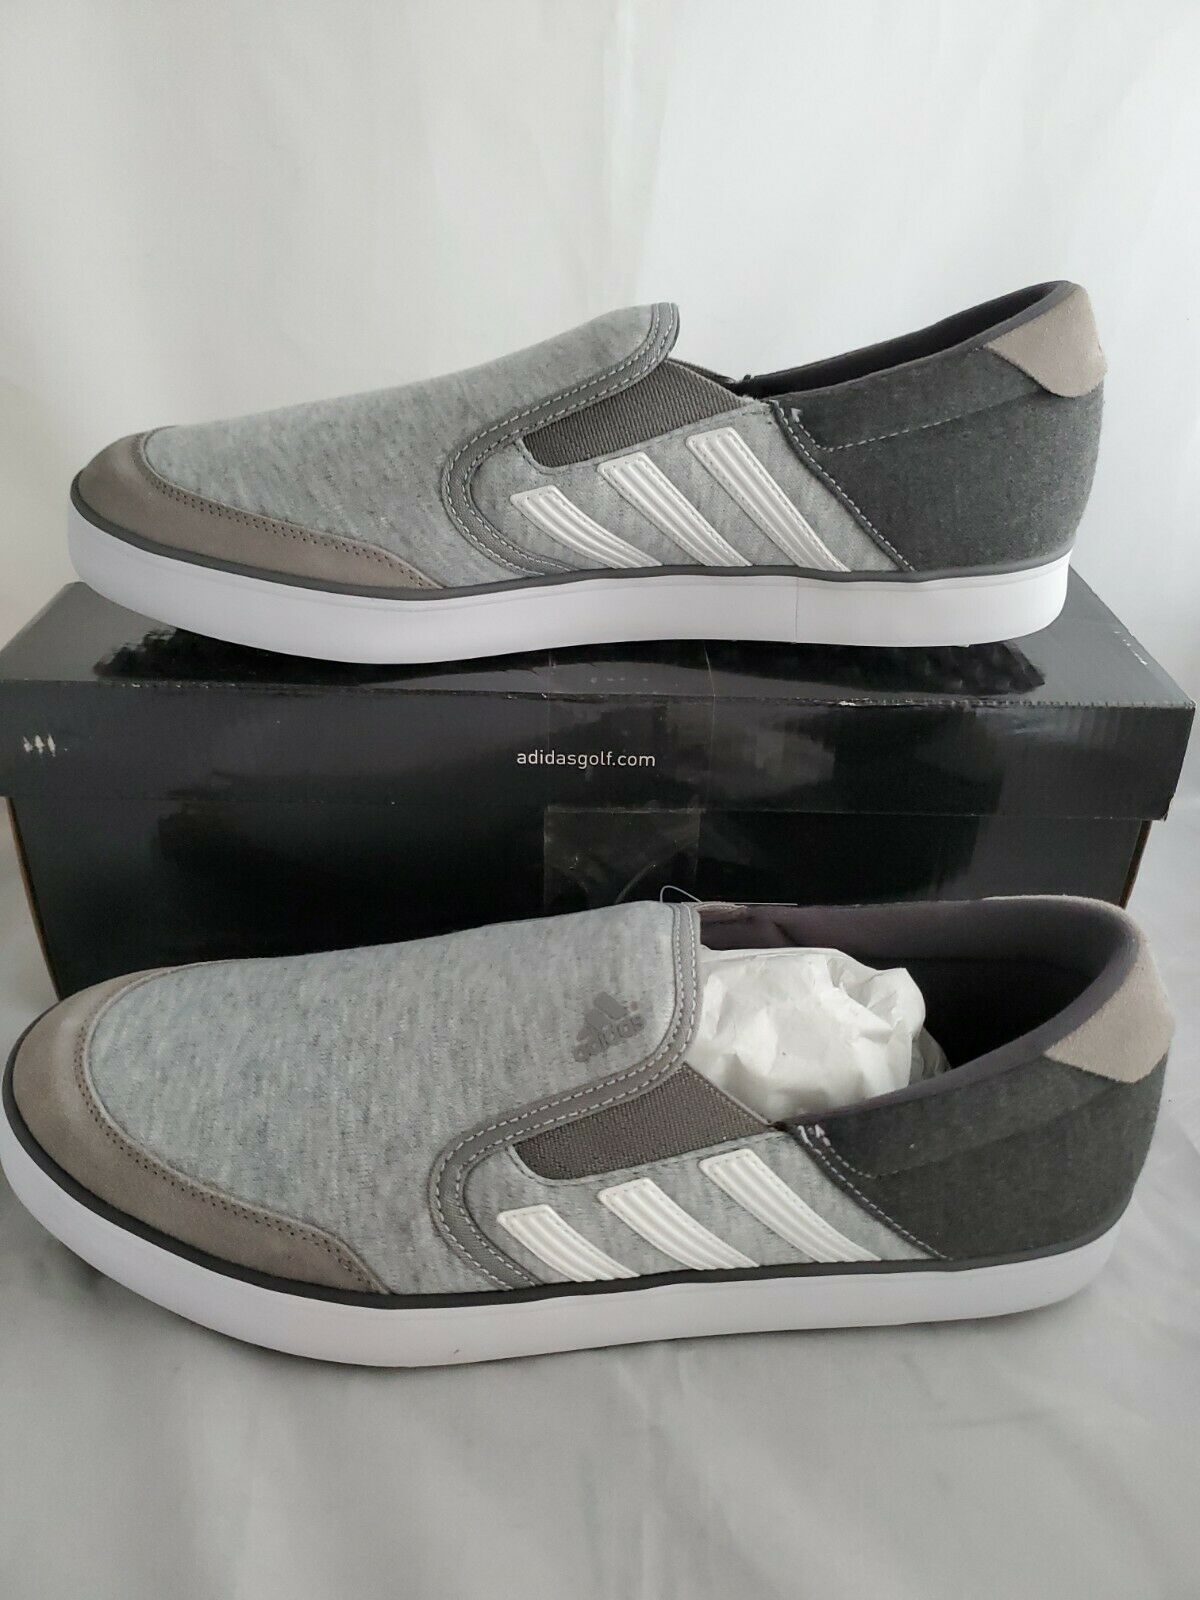 Adidas Adicross SL Men's Golf Shoes Walking Gray Size 12 Med Q44565 NEW